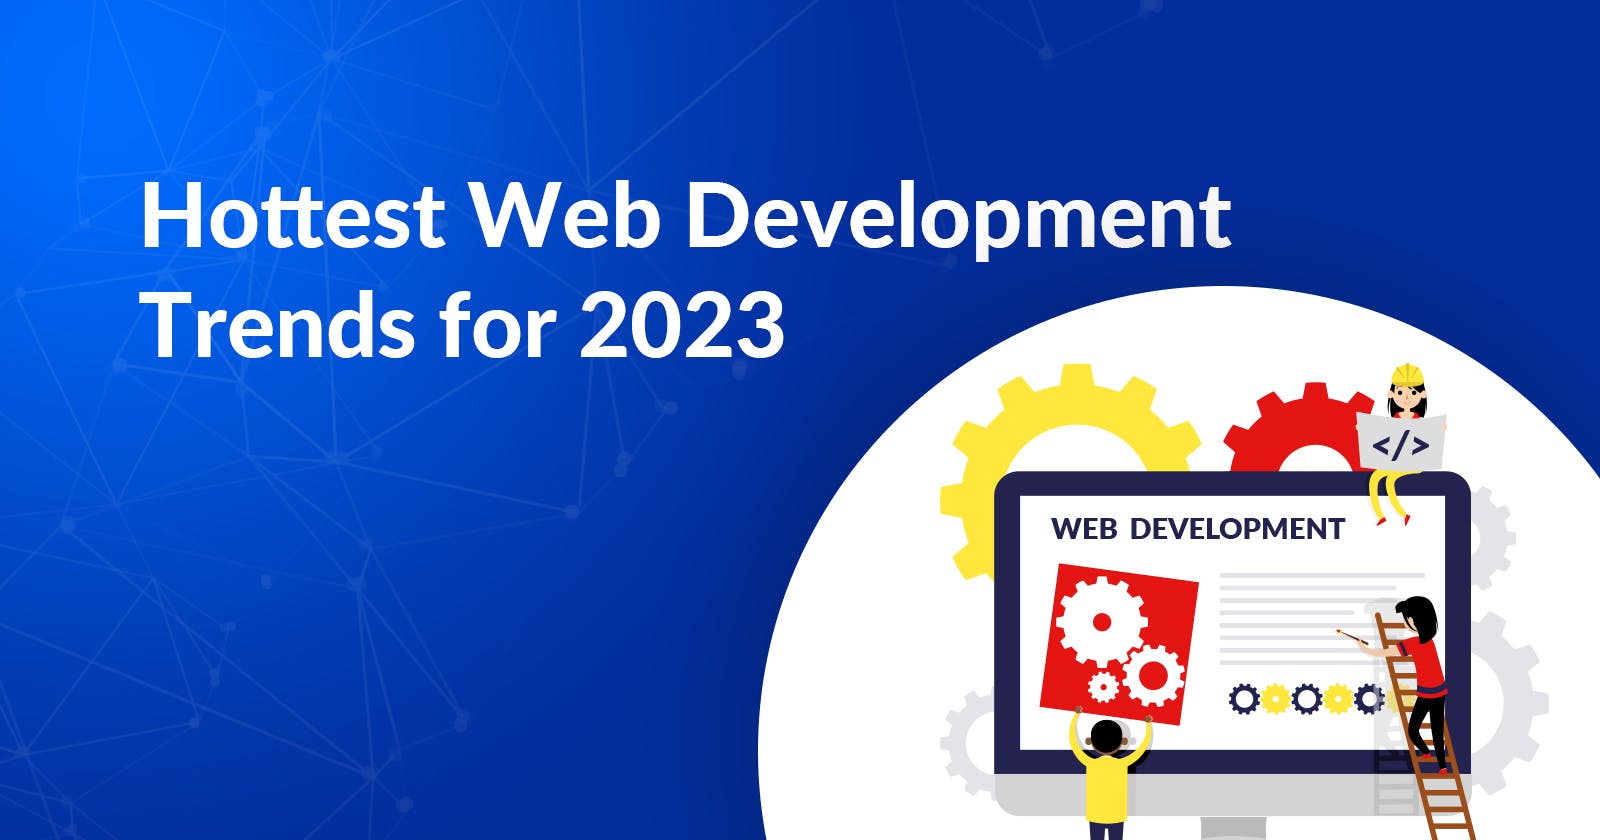 7 Hot Web Development Trends to Watch in 2023